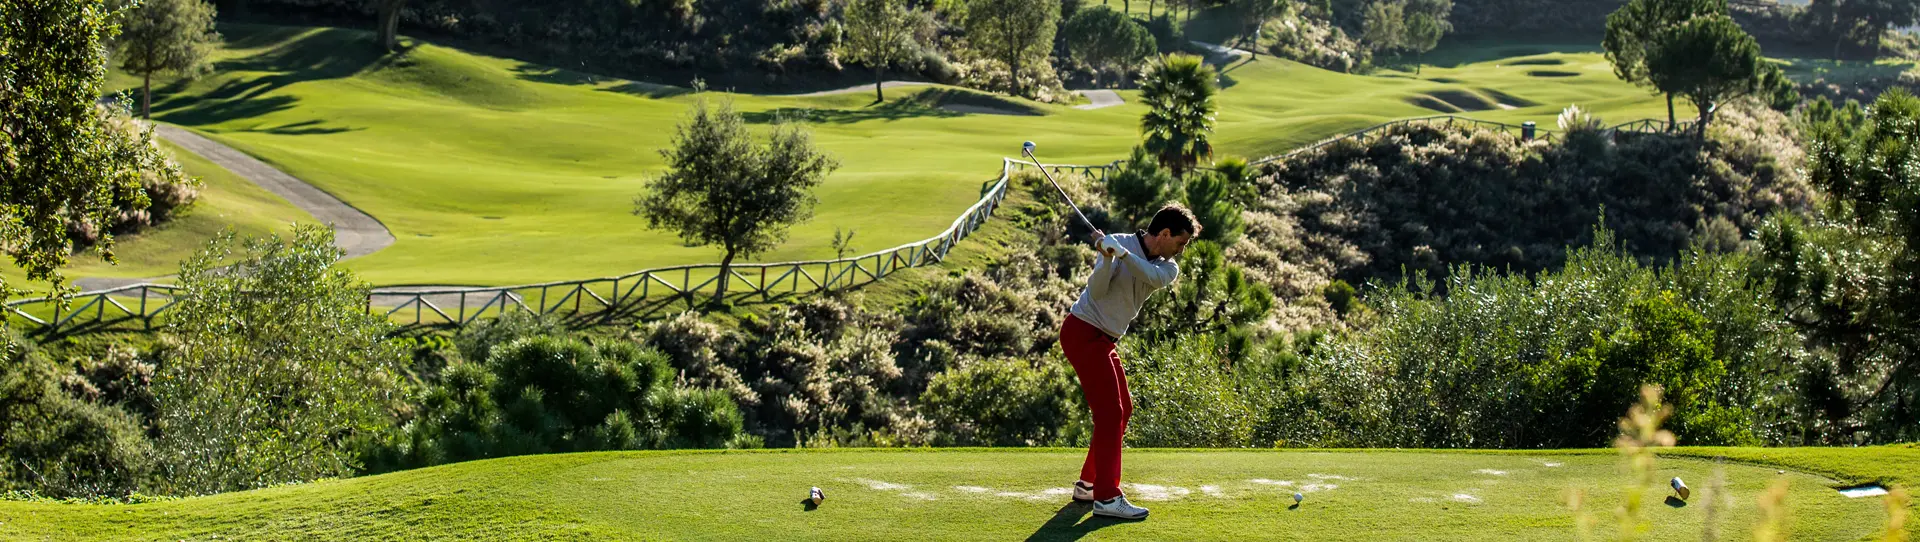 Spain golf courses - La Zagaleta New Course - Photo 2